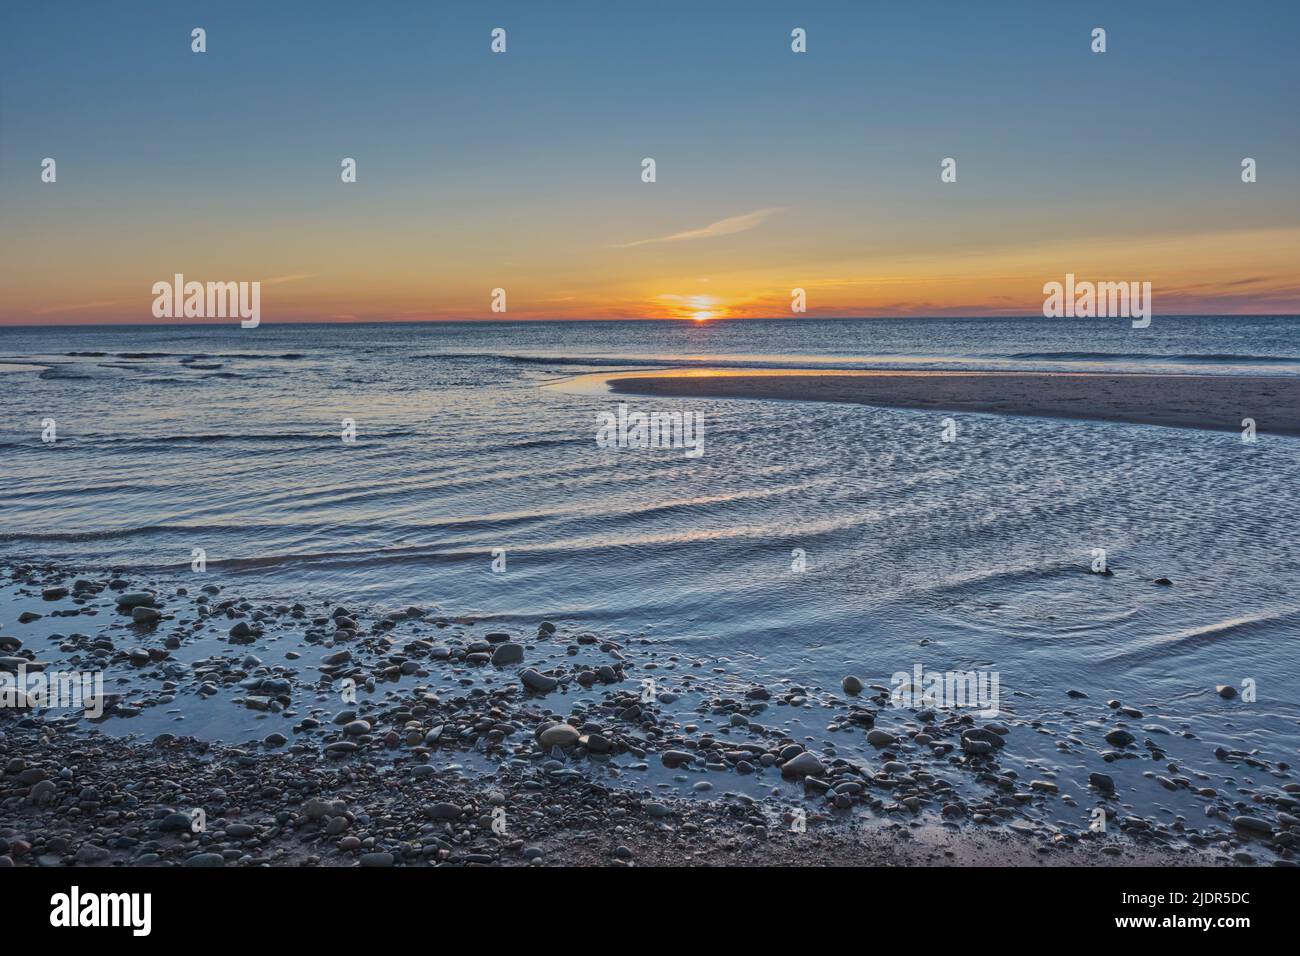 The beautiful beach in Inverness Cape Breton Nova Scotia photographed at sunset. Stock Photo